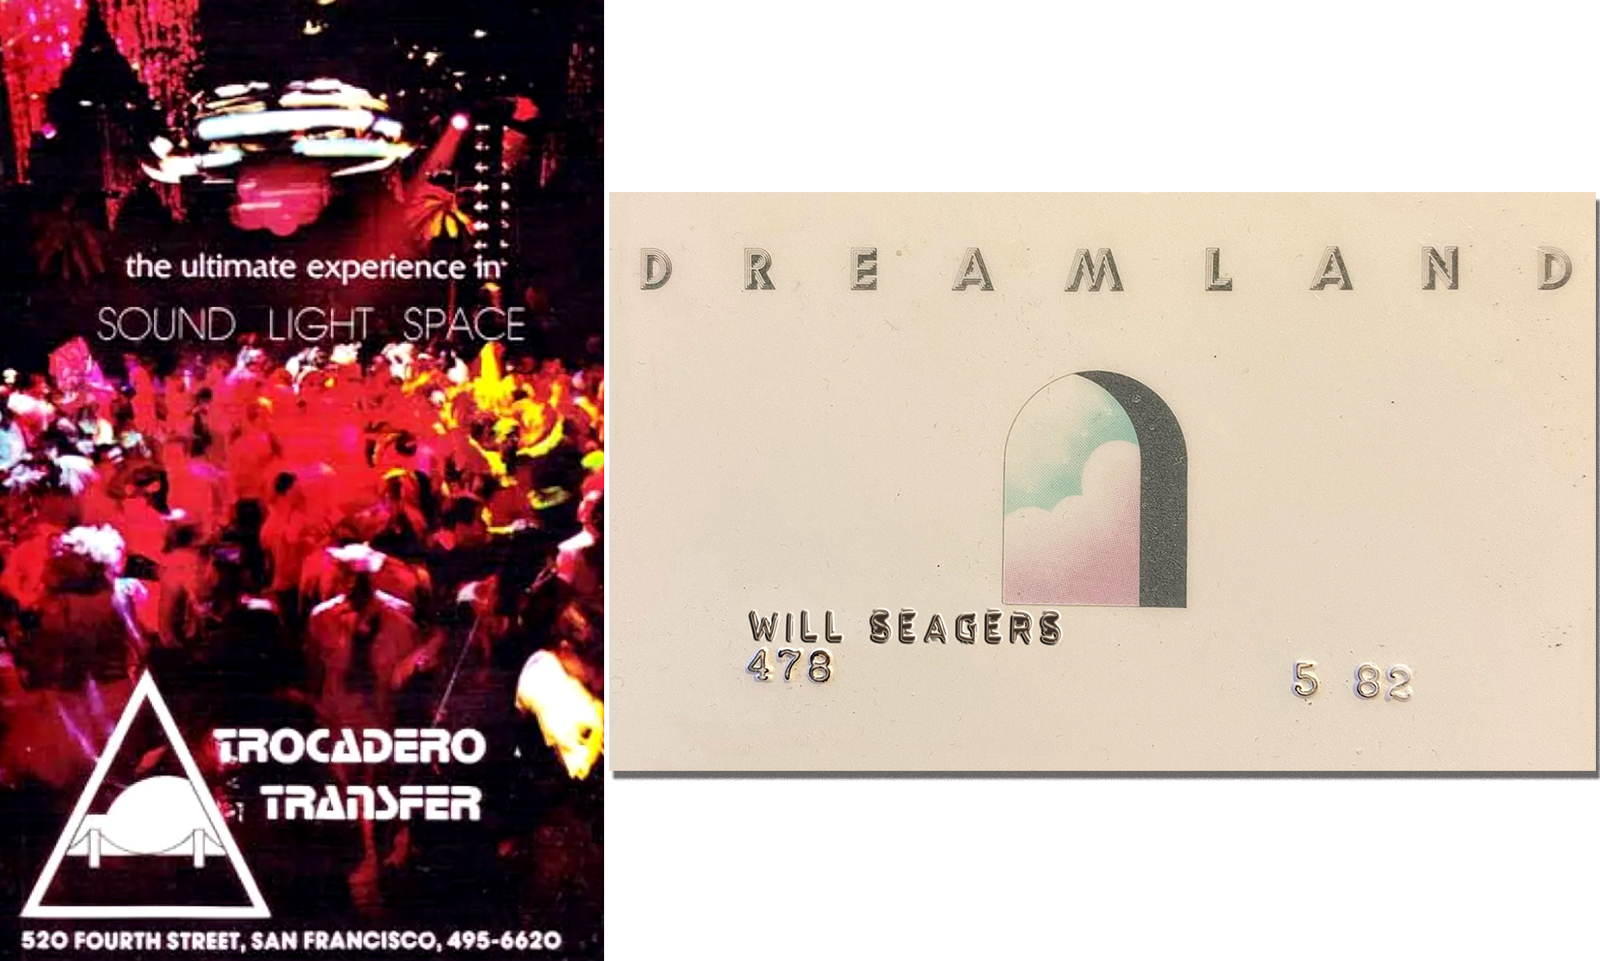 Trocadero Transfer ad (L); Will Seagers' Dreamland membership card (R)